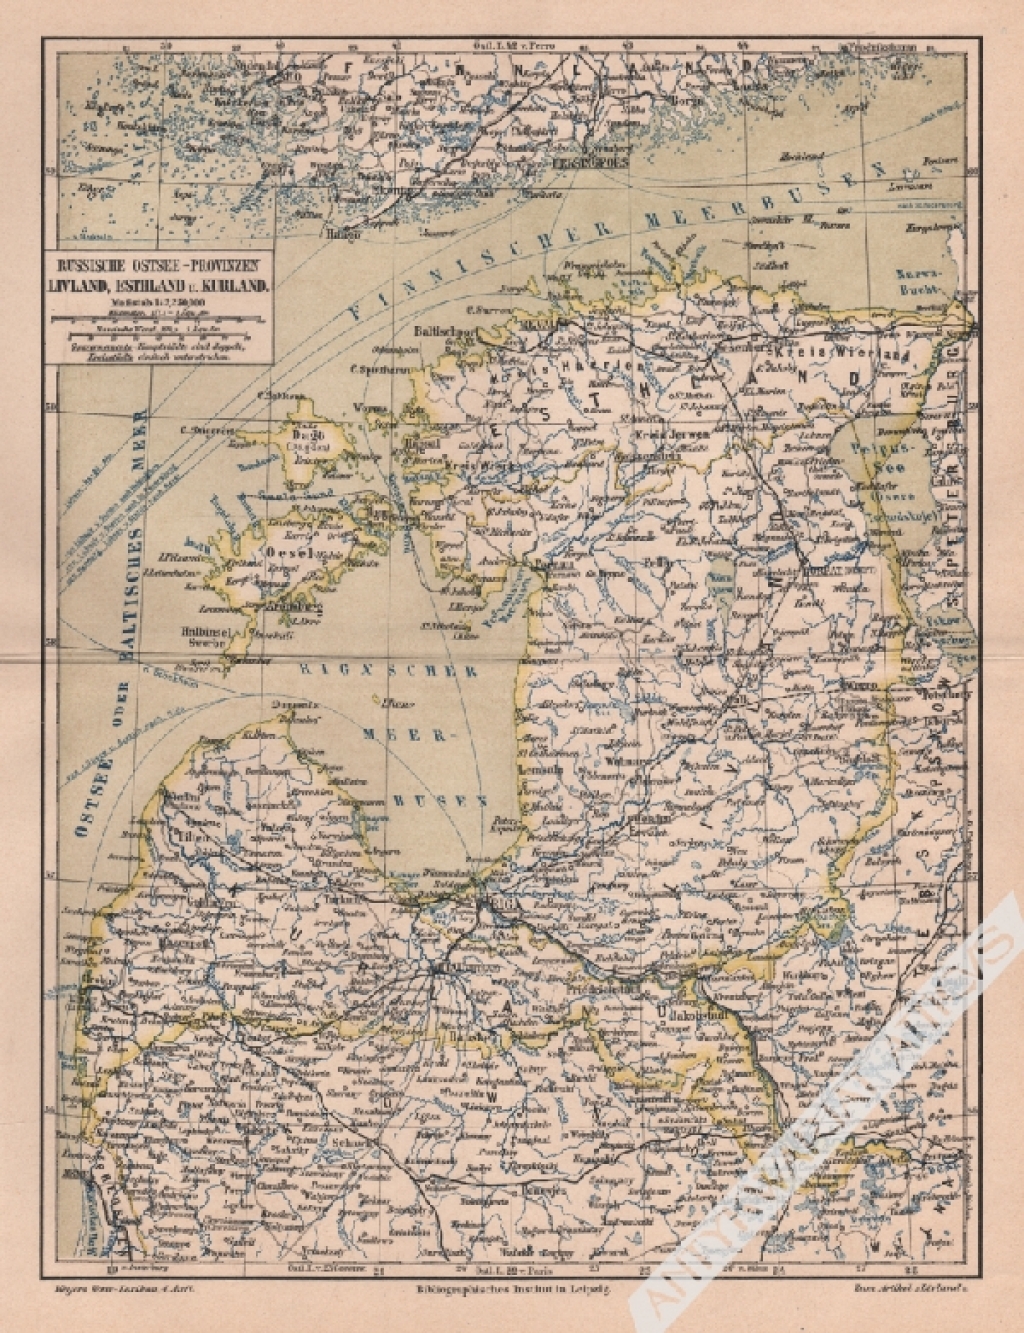 [mapa, ok. 1890] Russische Ostsee-Provinzen. Esthland, Livland und Kurland [Estonia, Łotwa i Kurlandia]